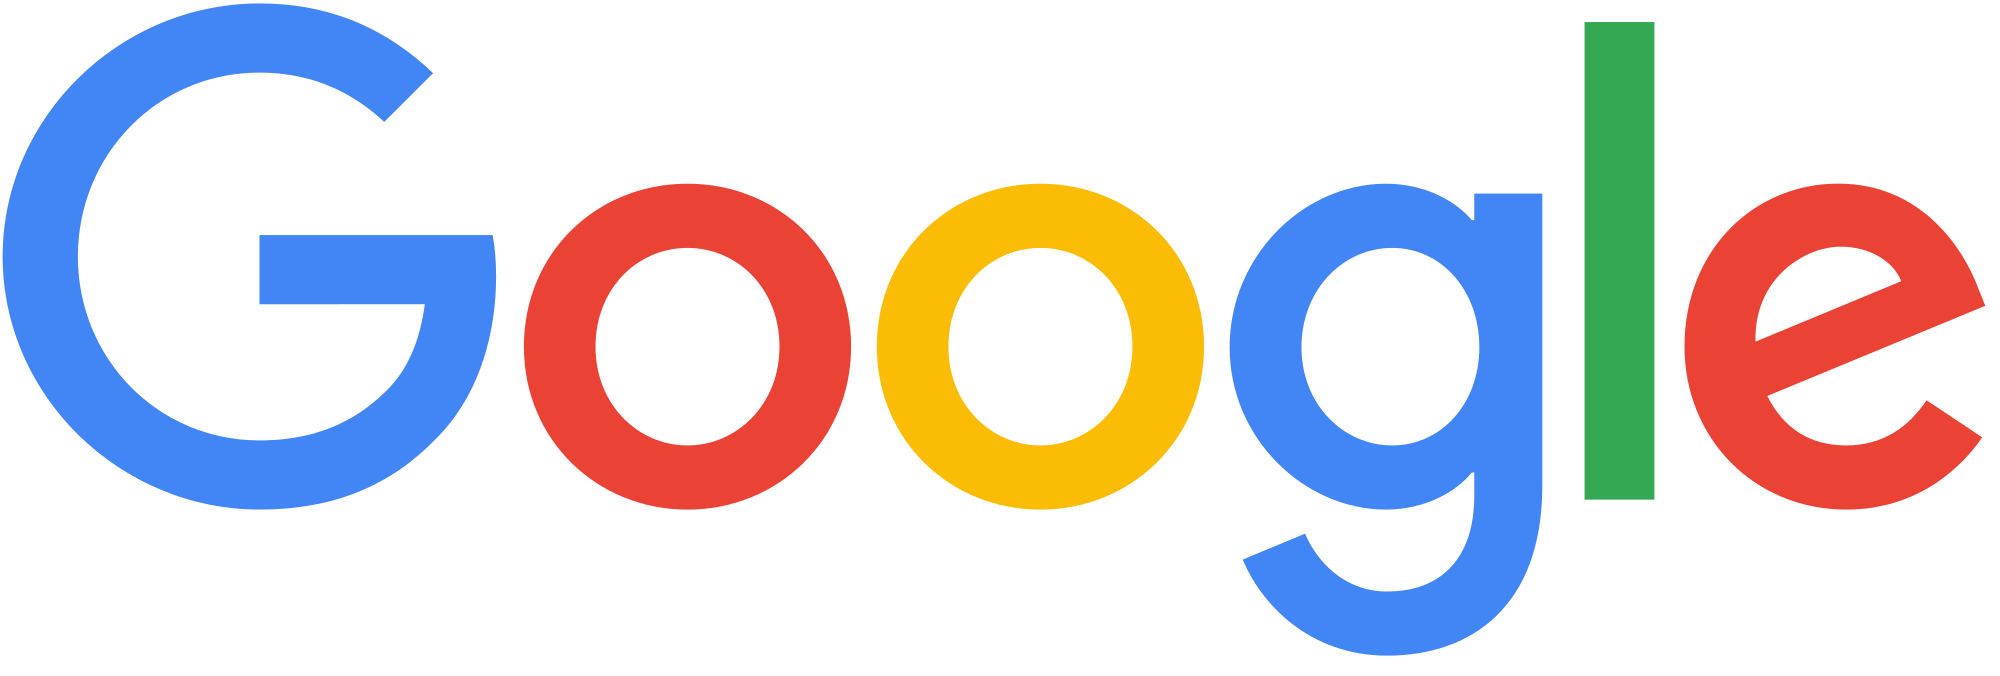 Google Logo Icon Transparent Image